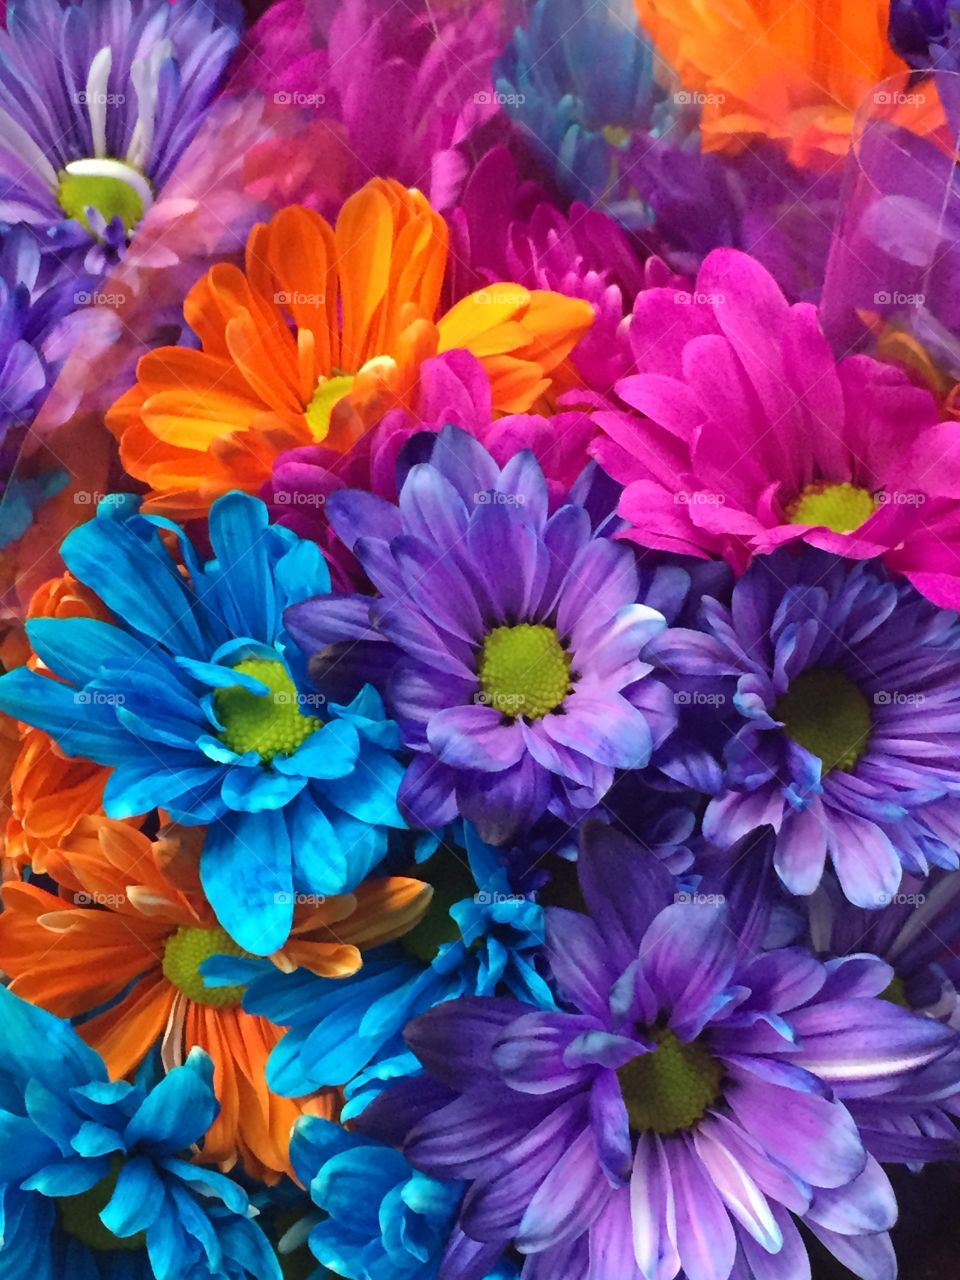 Bright flowers